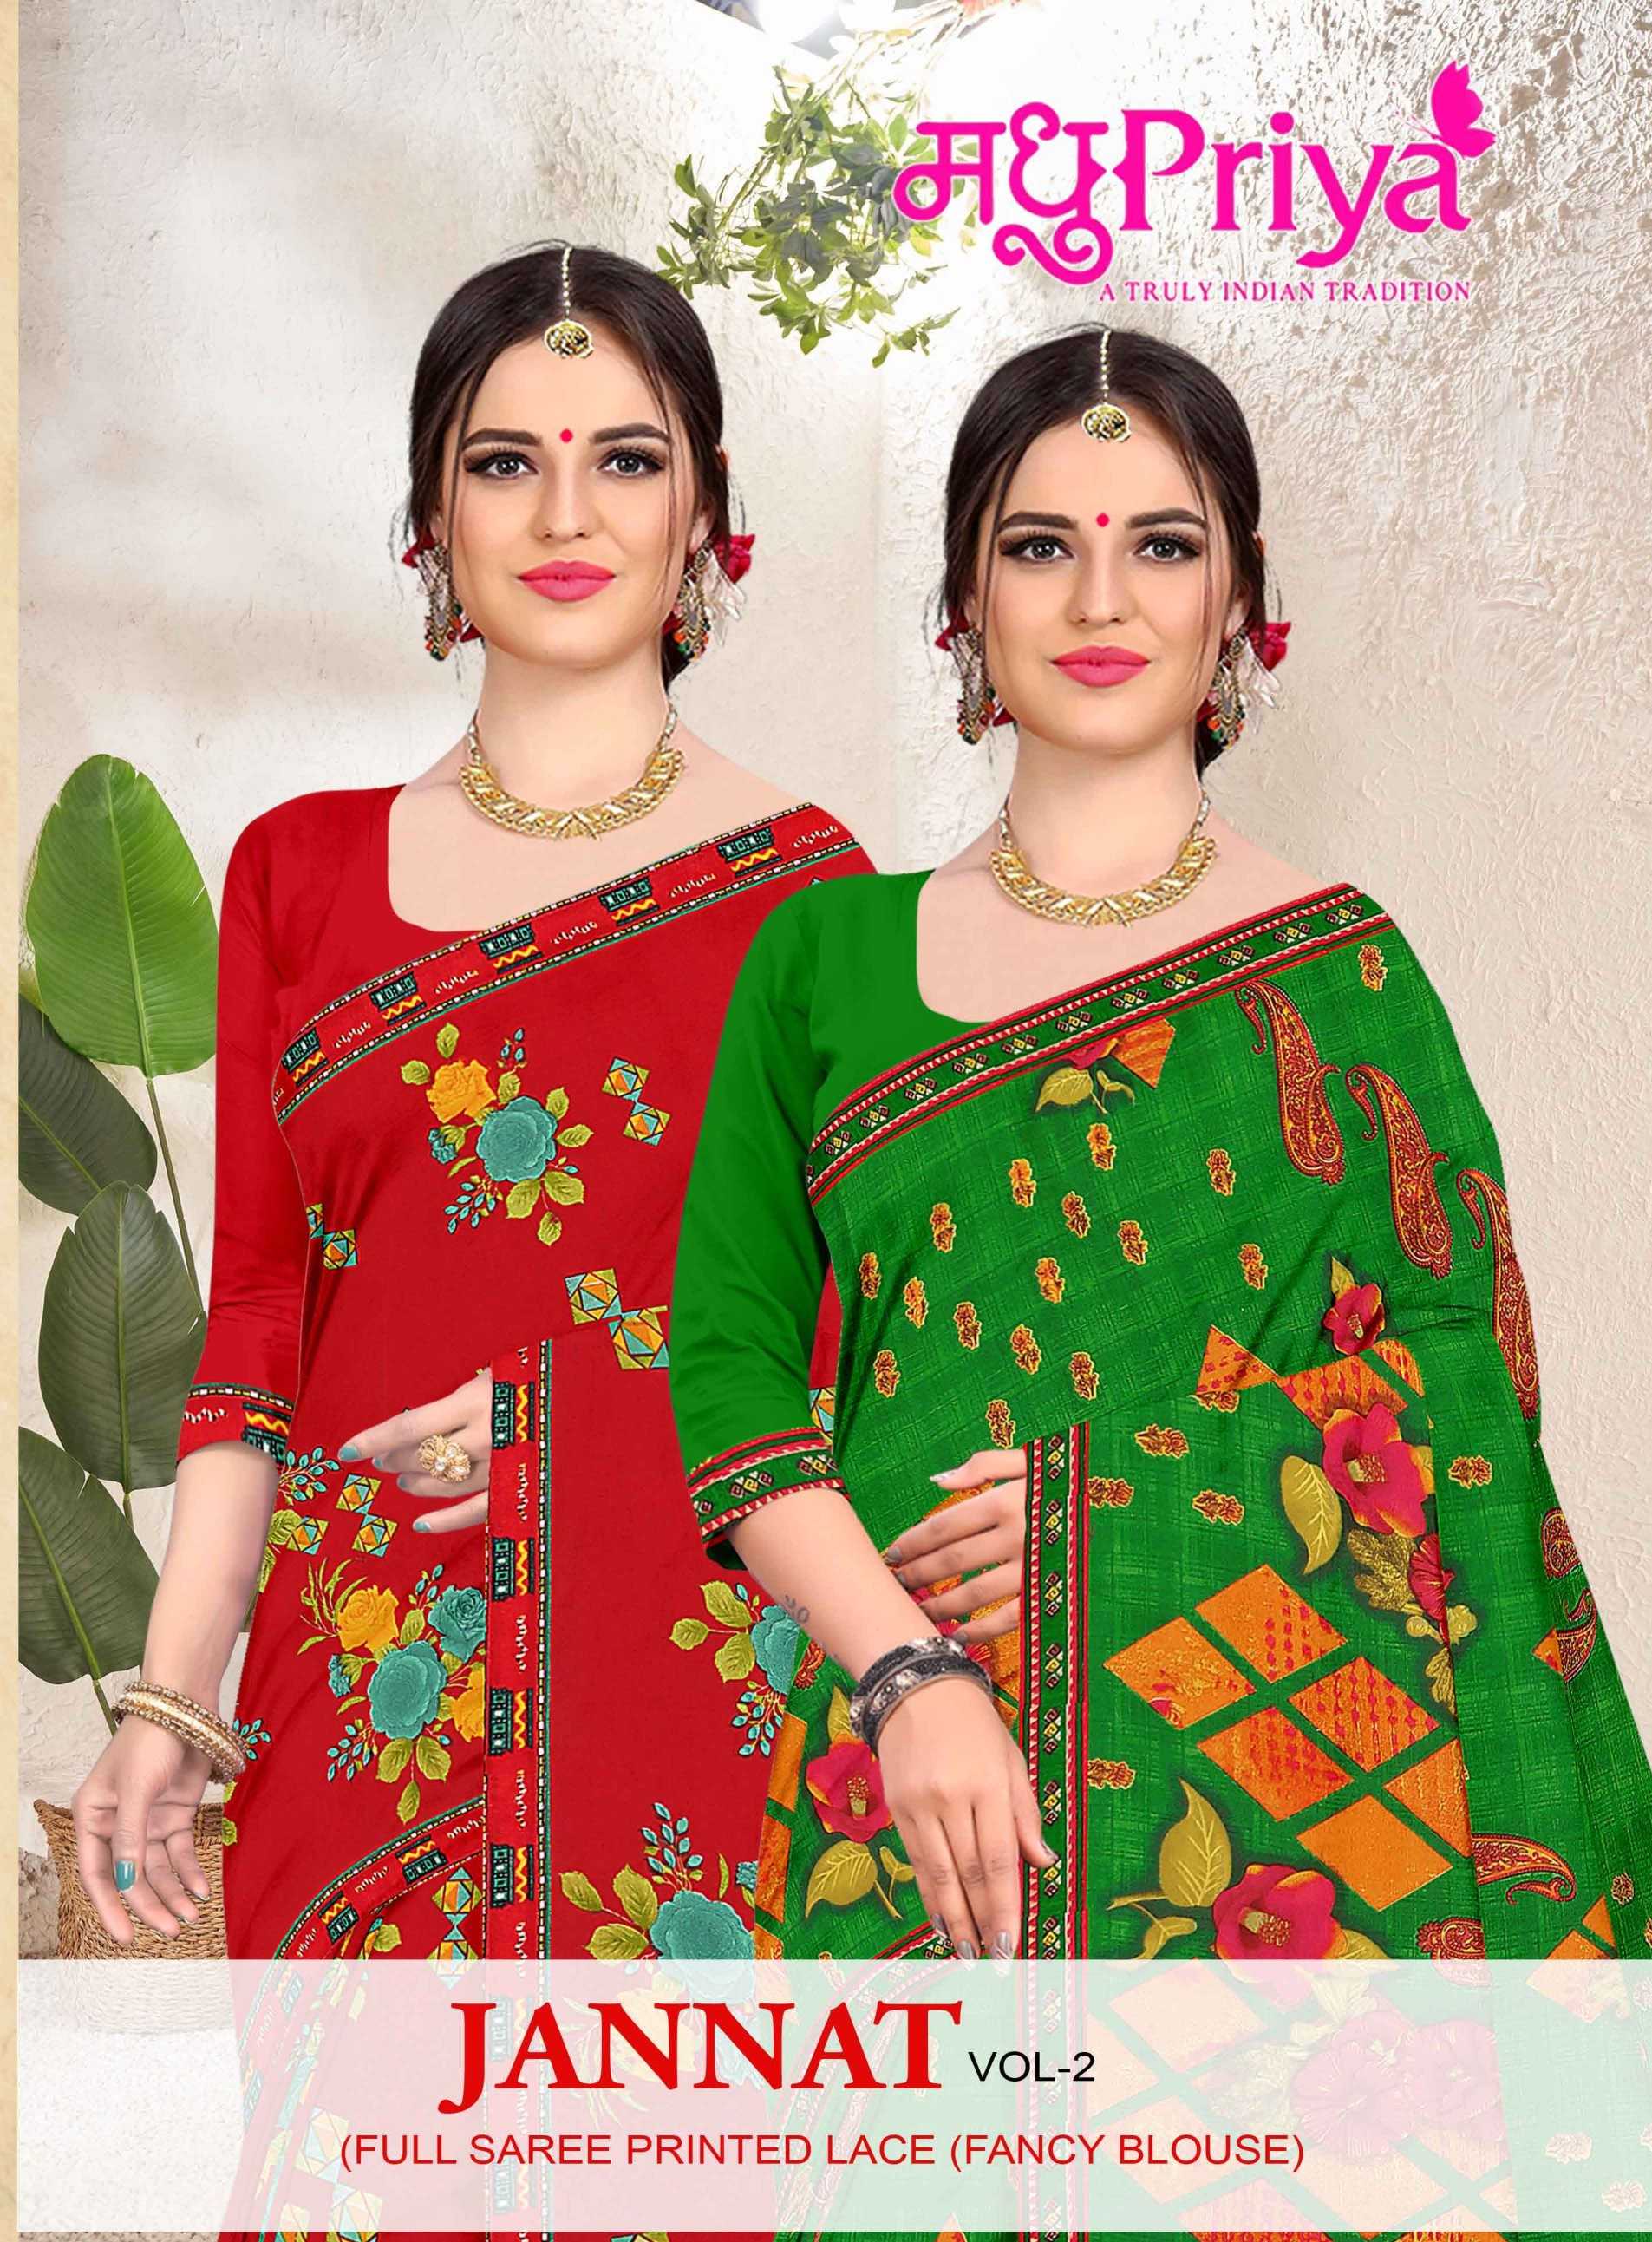 madhupriya jannat vol 2 beautiful renial print comfy wear sarees